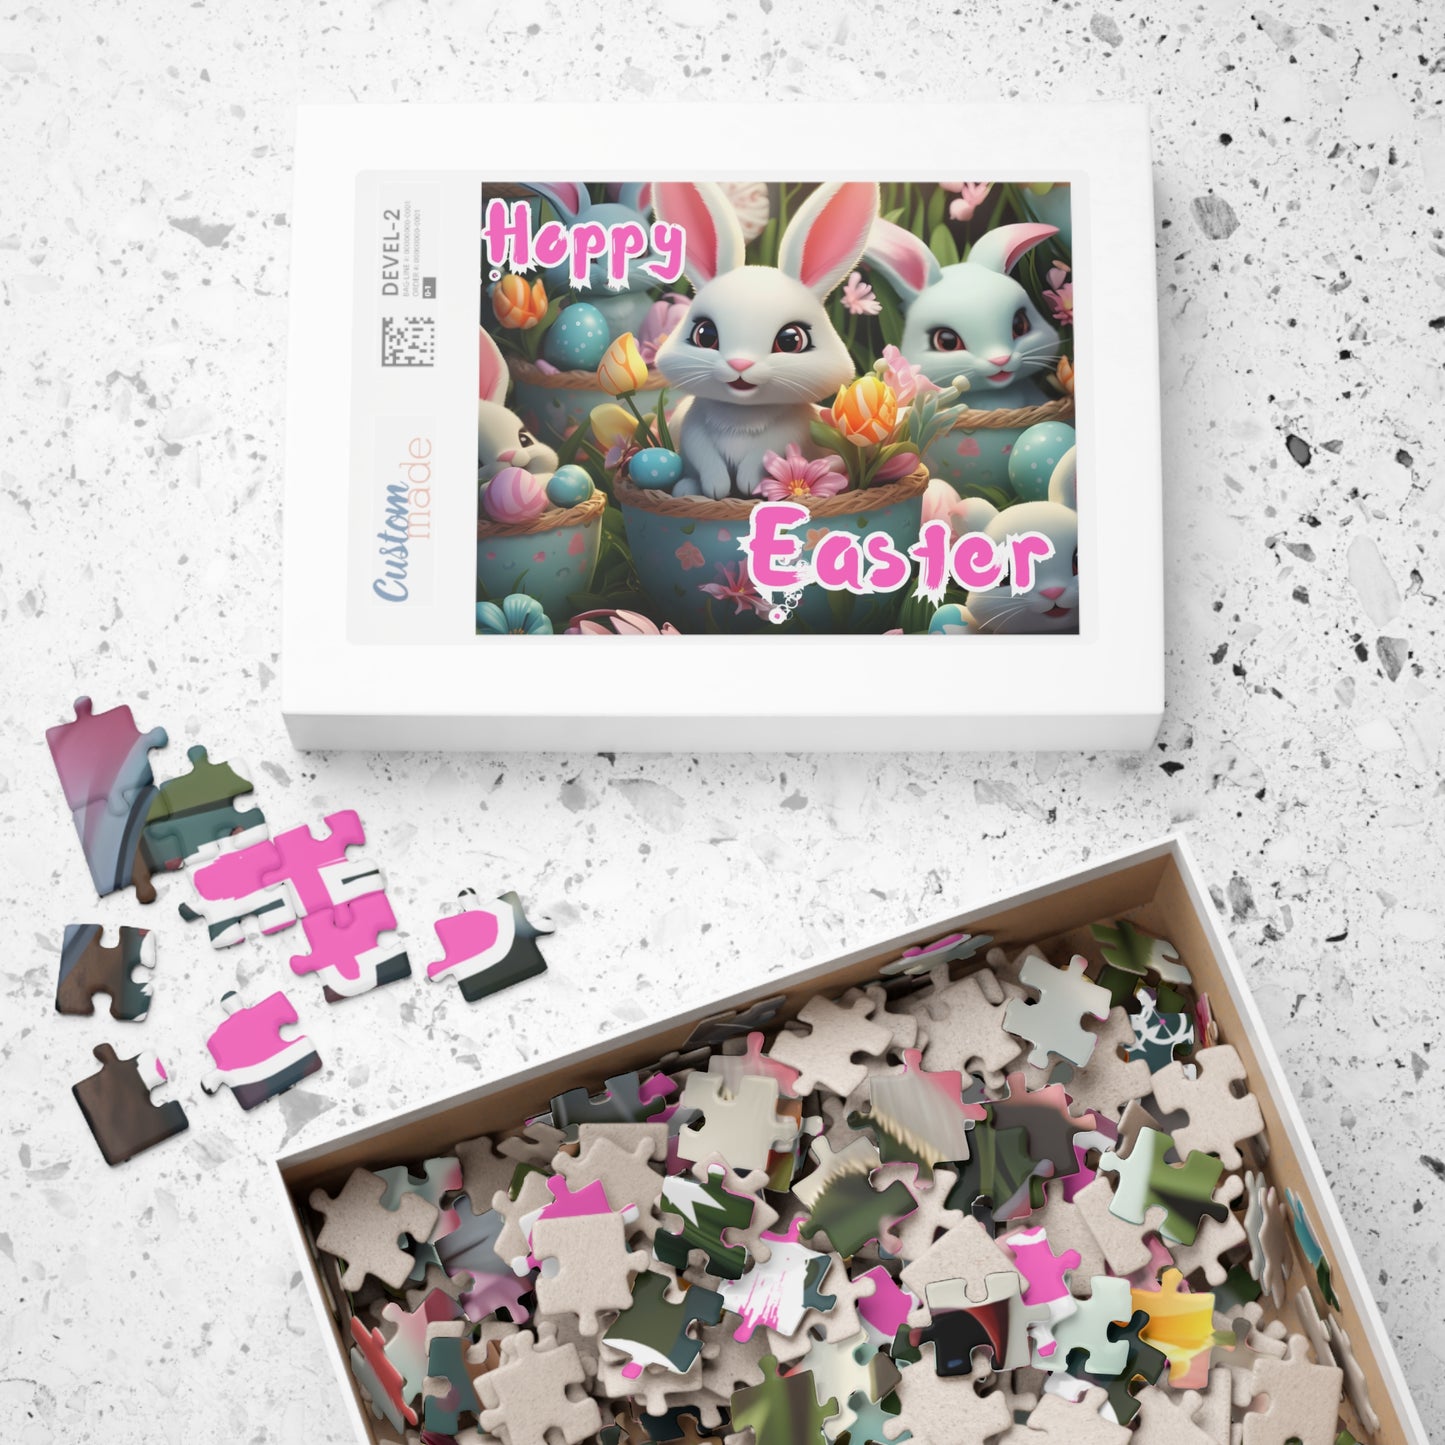 Hoppy Easter Puzzle (110, 252, 500-piece)